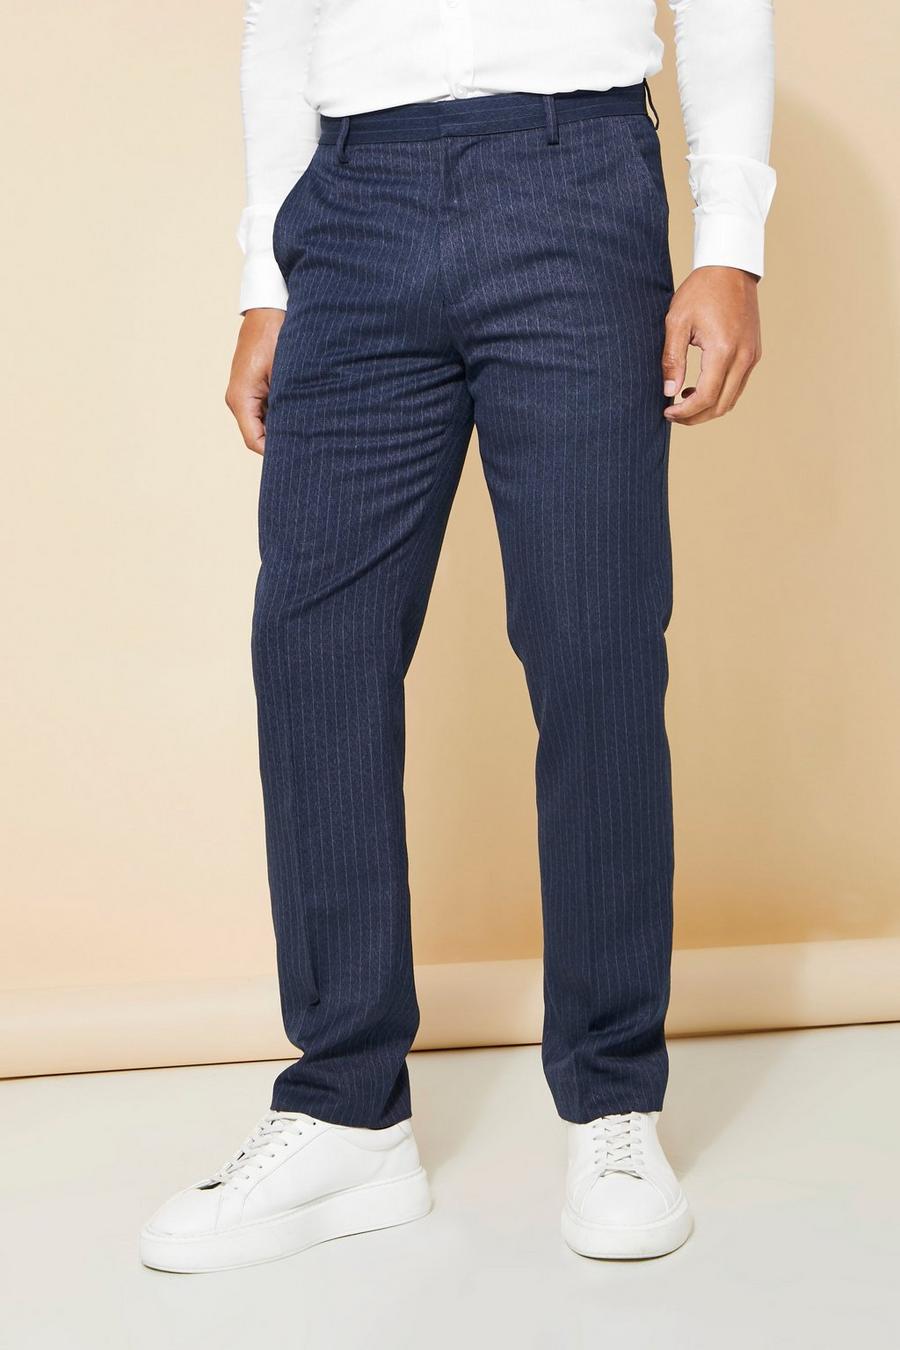 Pantaloni sartoriali Slim Fit a righe verticali, Navy blu oltremare